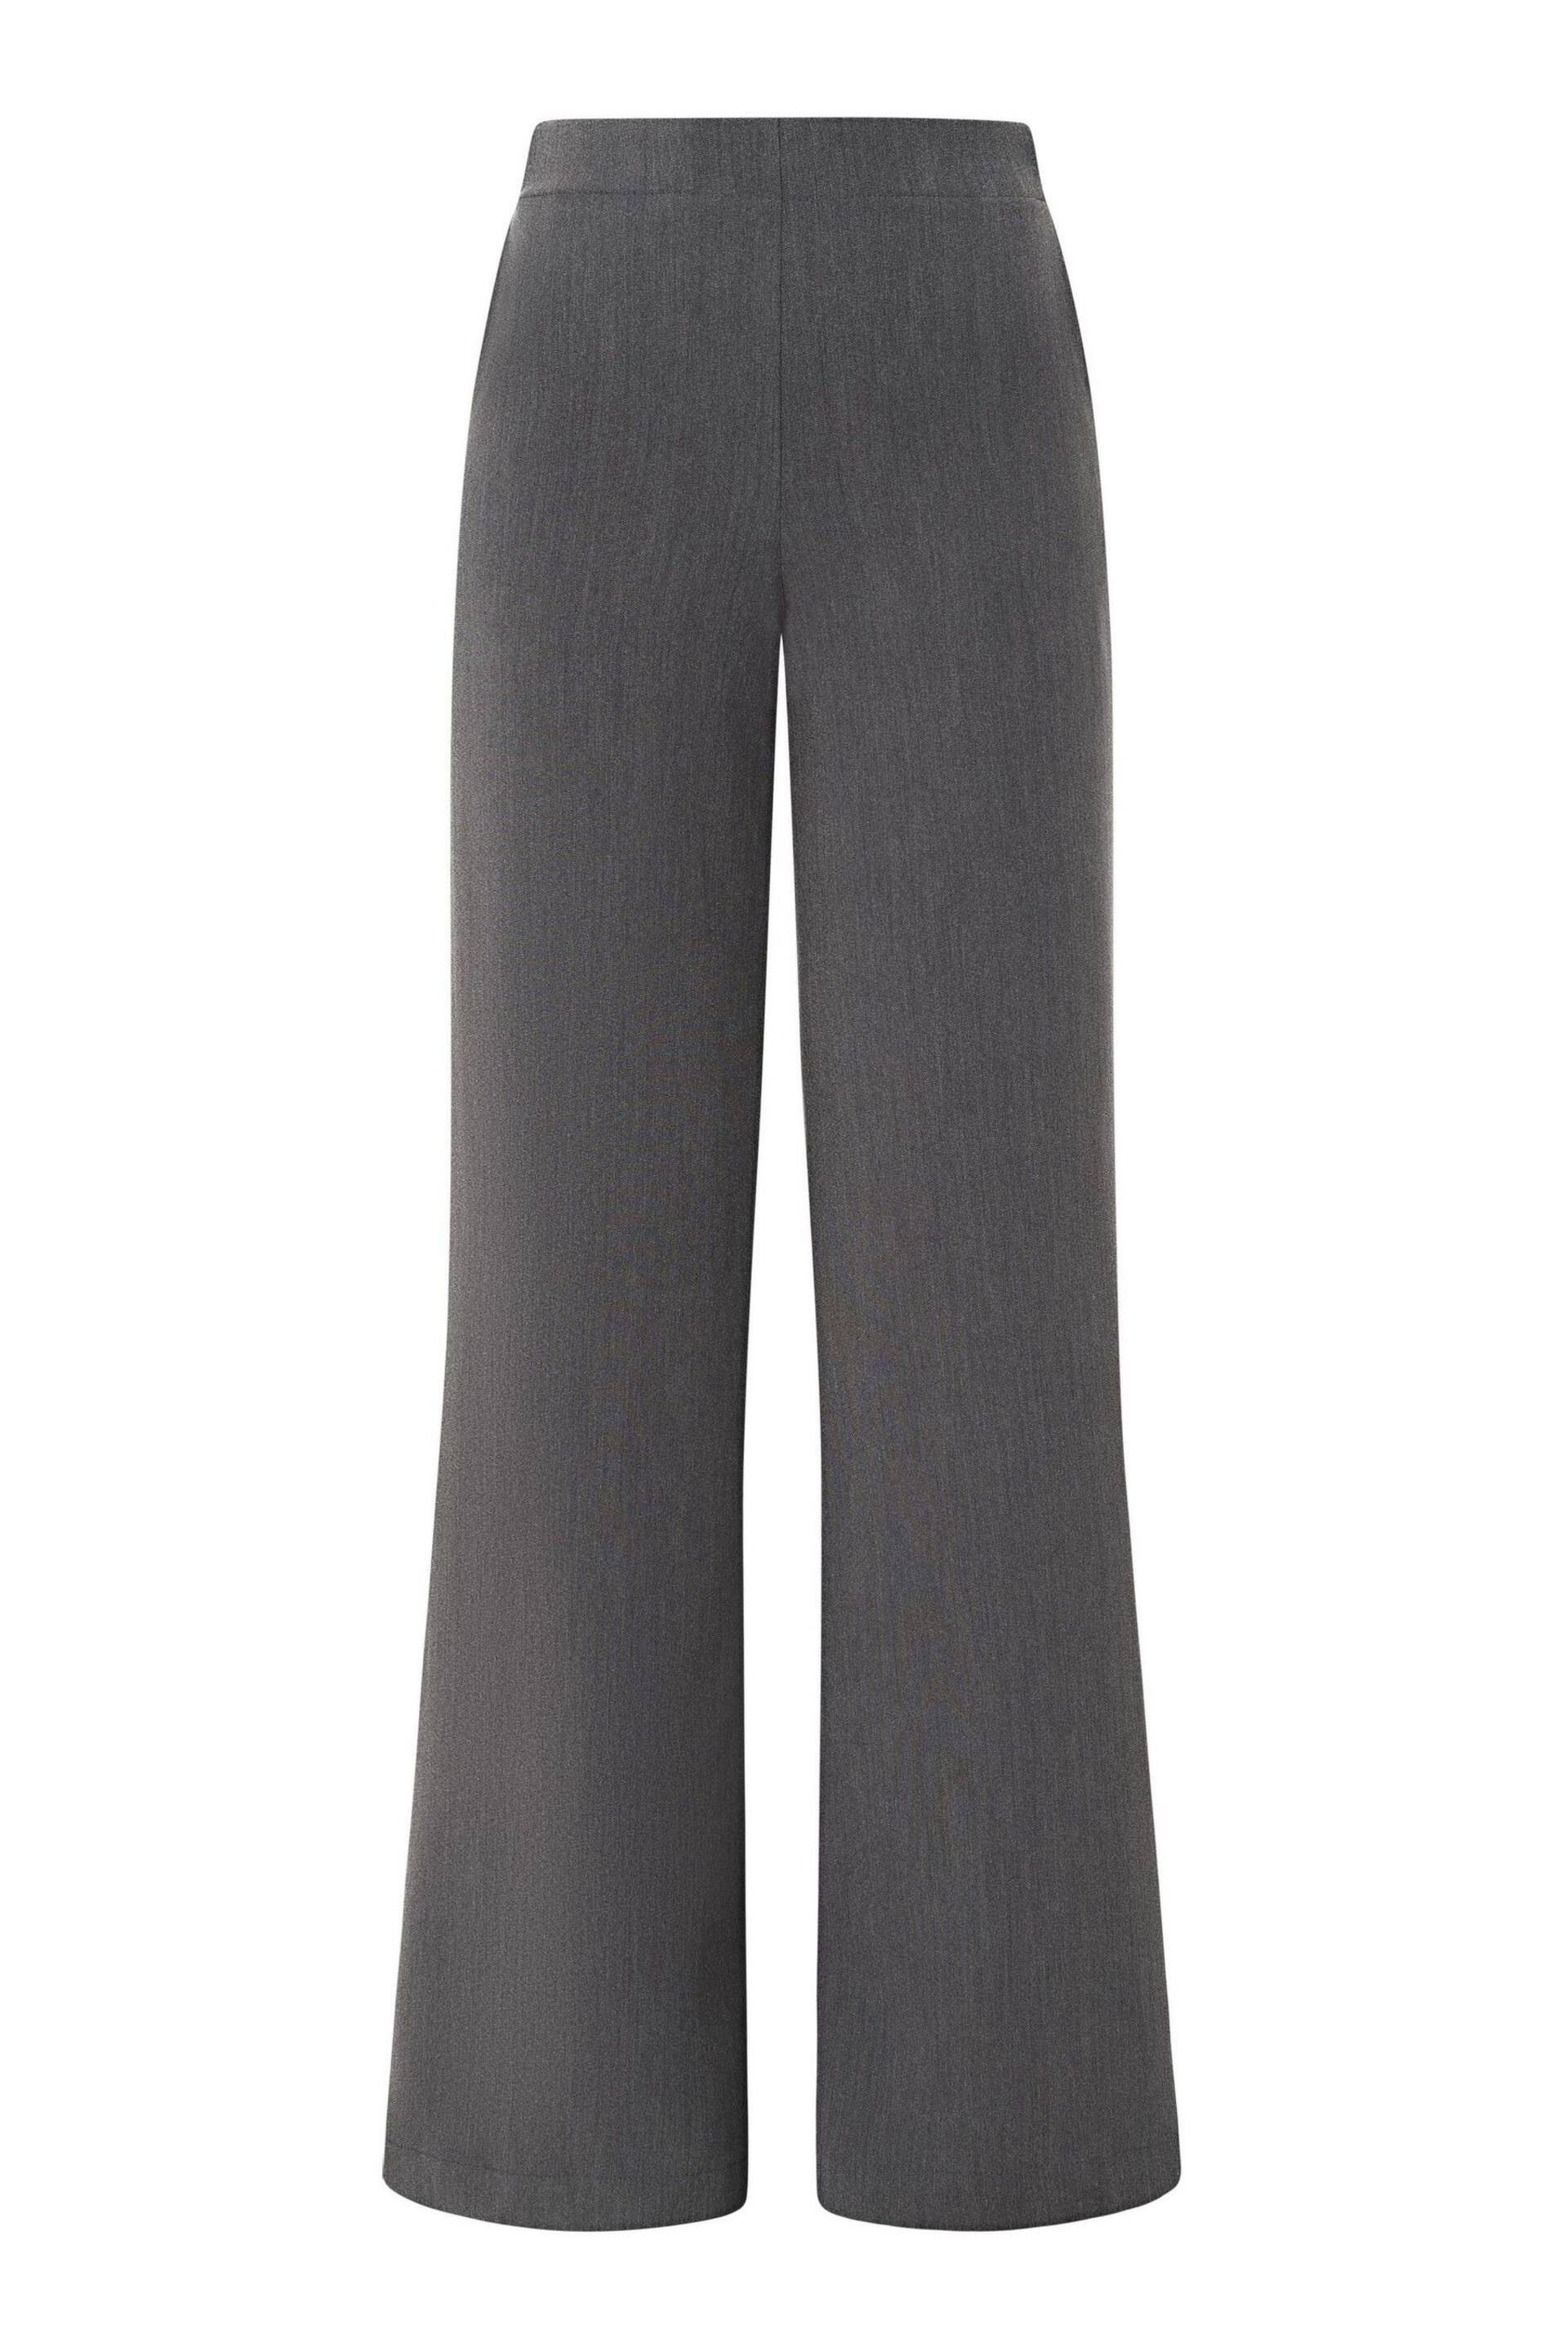 Hot Squash Grey Wideleg Trousers - Image 3 of 3